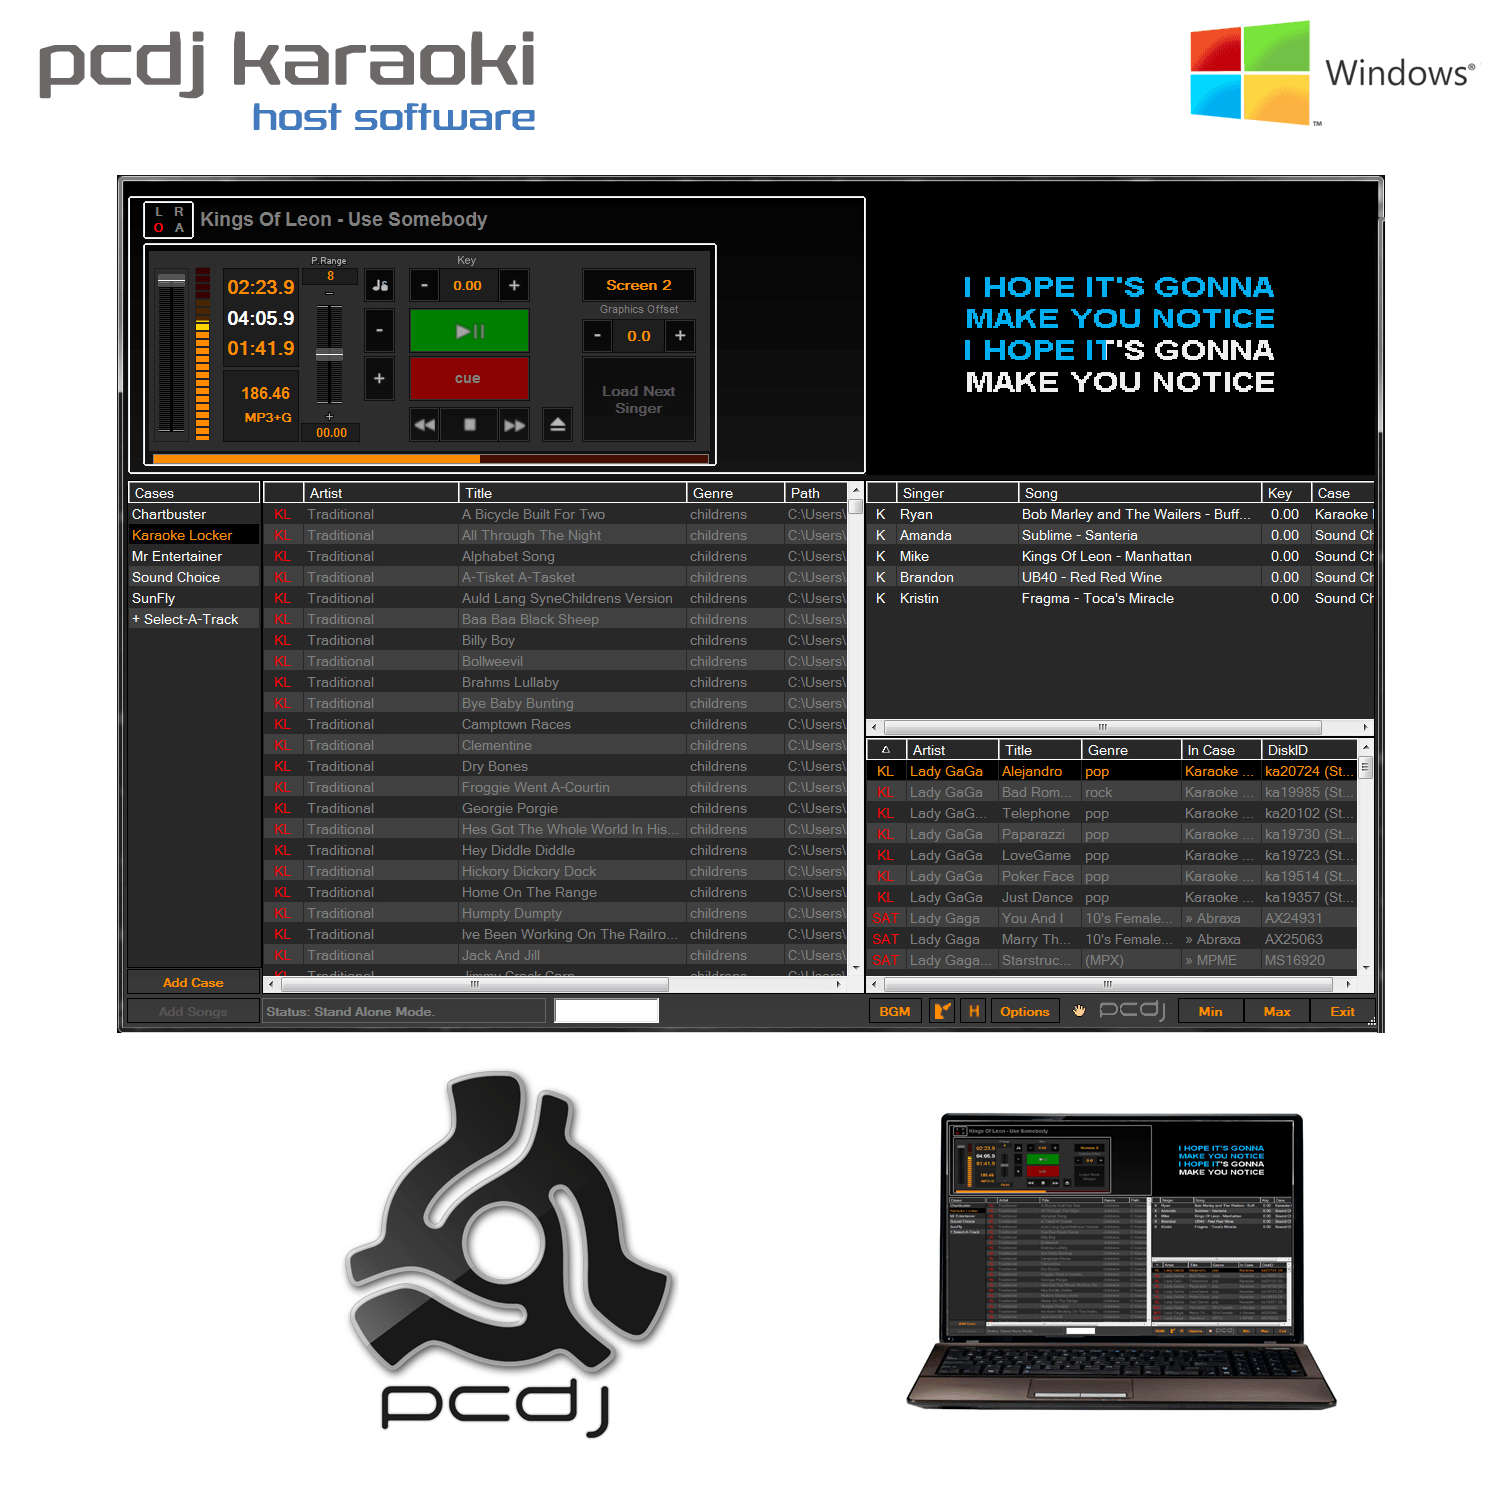 PCDJ Karaoki Hosting Software (Karaoke MP3+G Playback) Windows PC (14 Day Trial Version) - Karaoke Home Entertainment